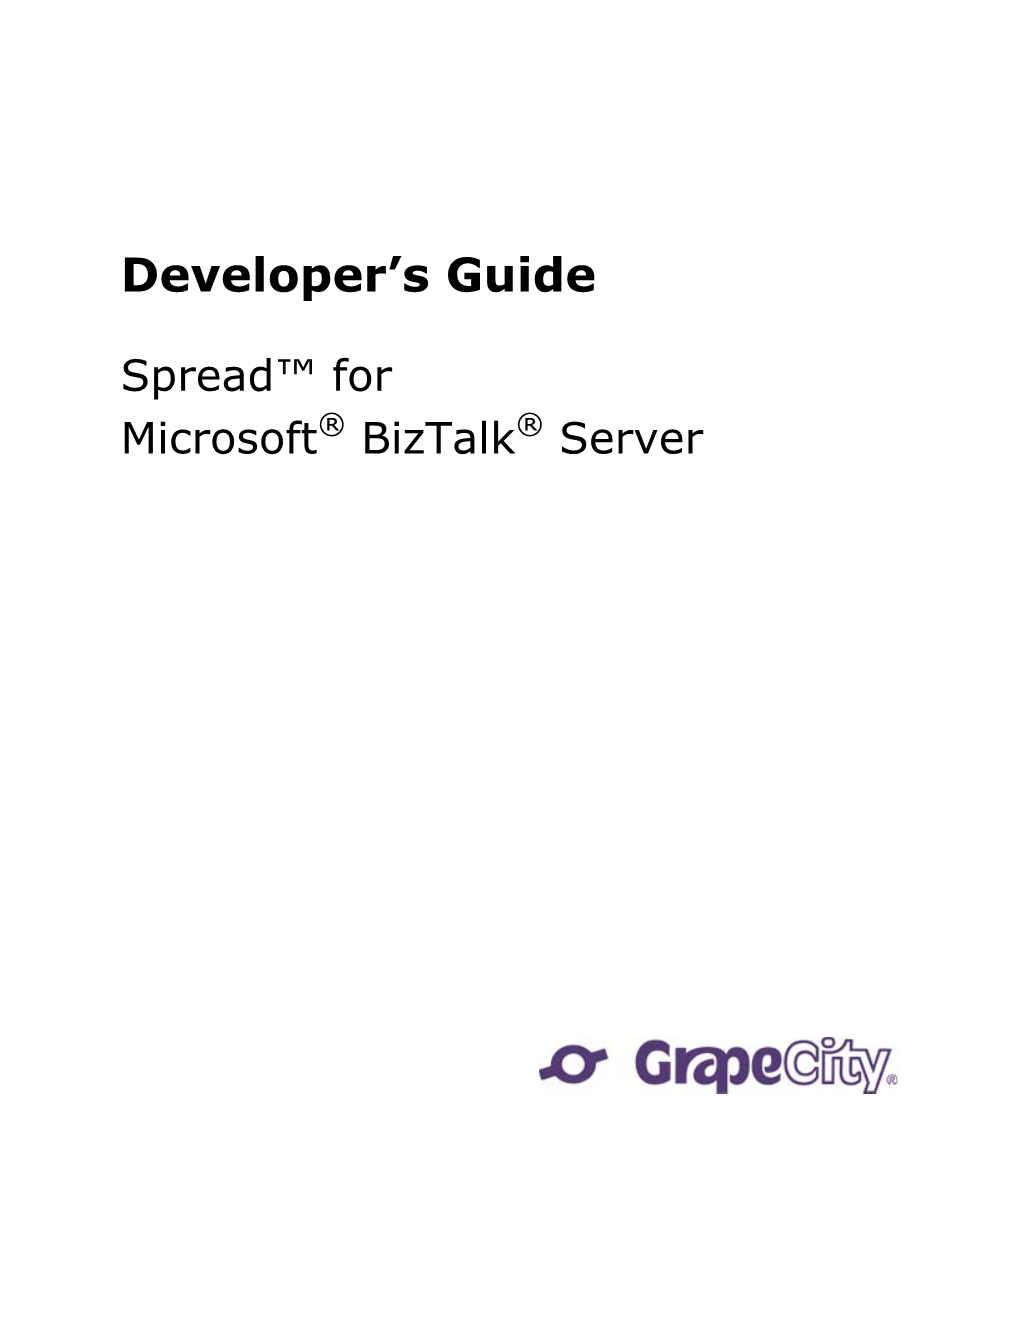 Spread for Biztalk Developer's Guide